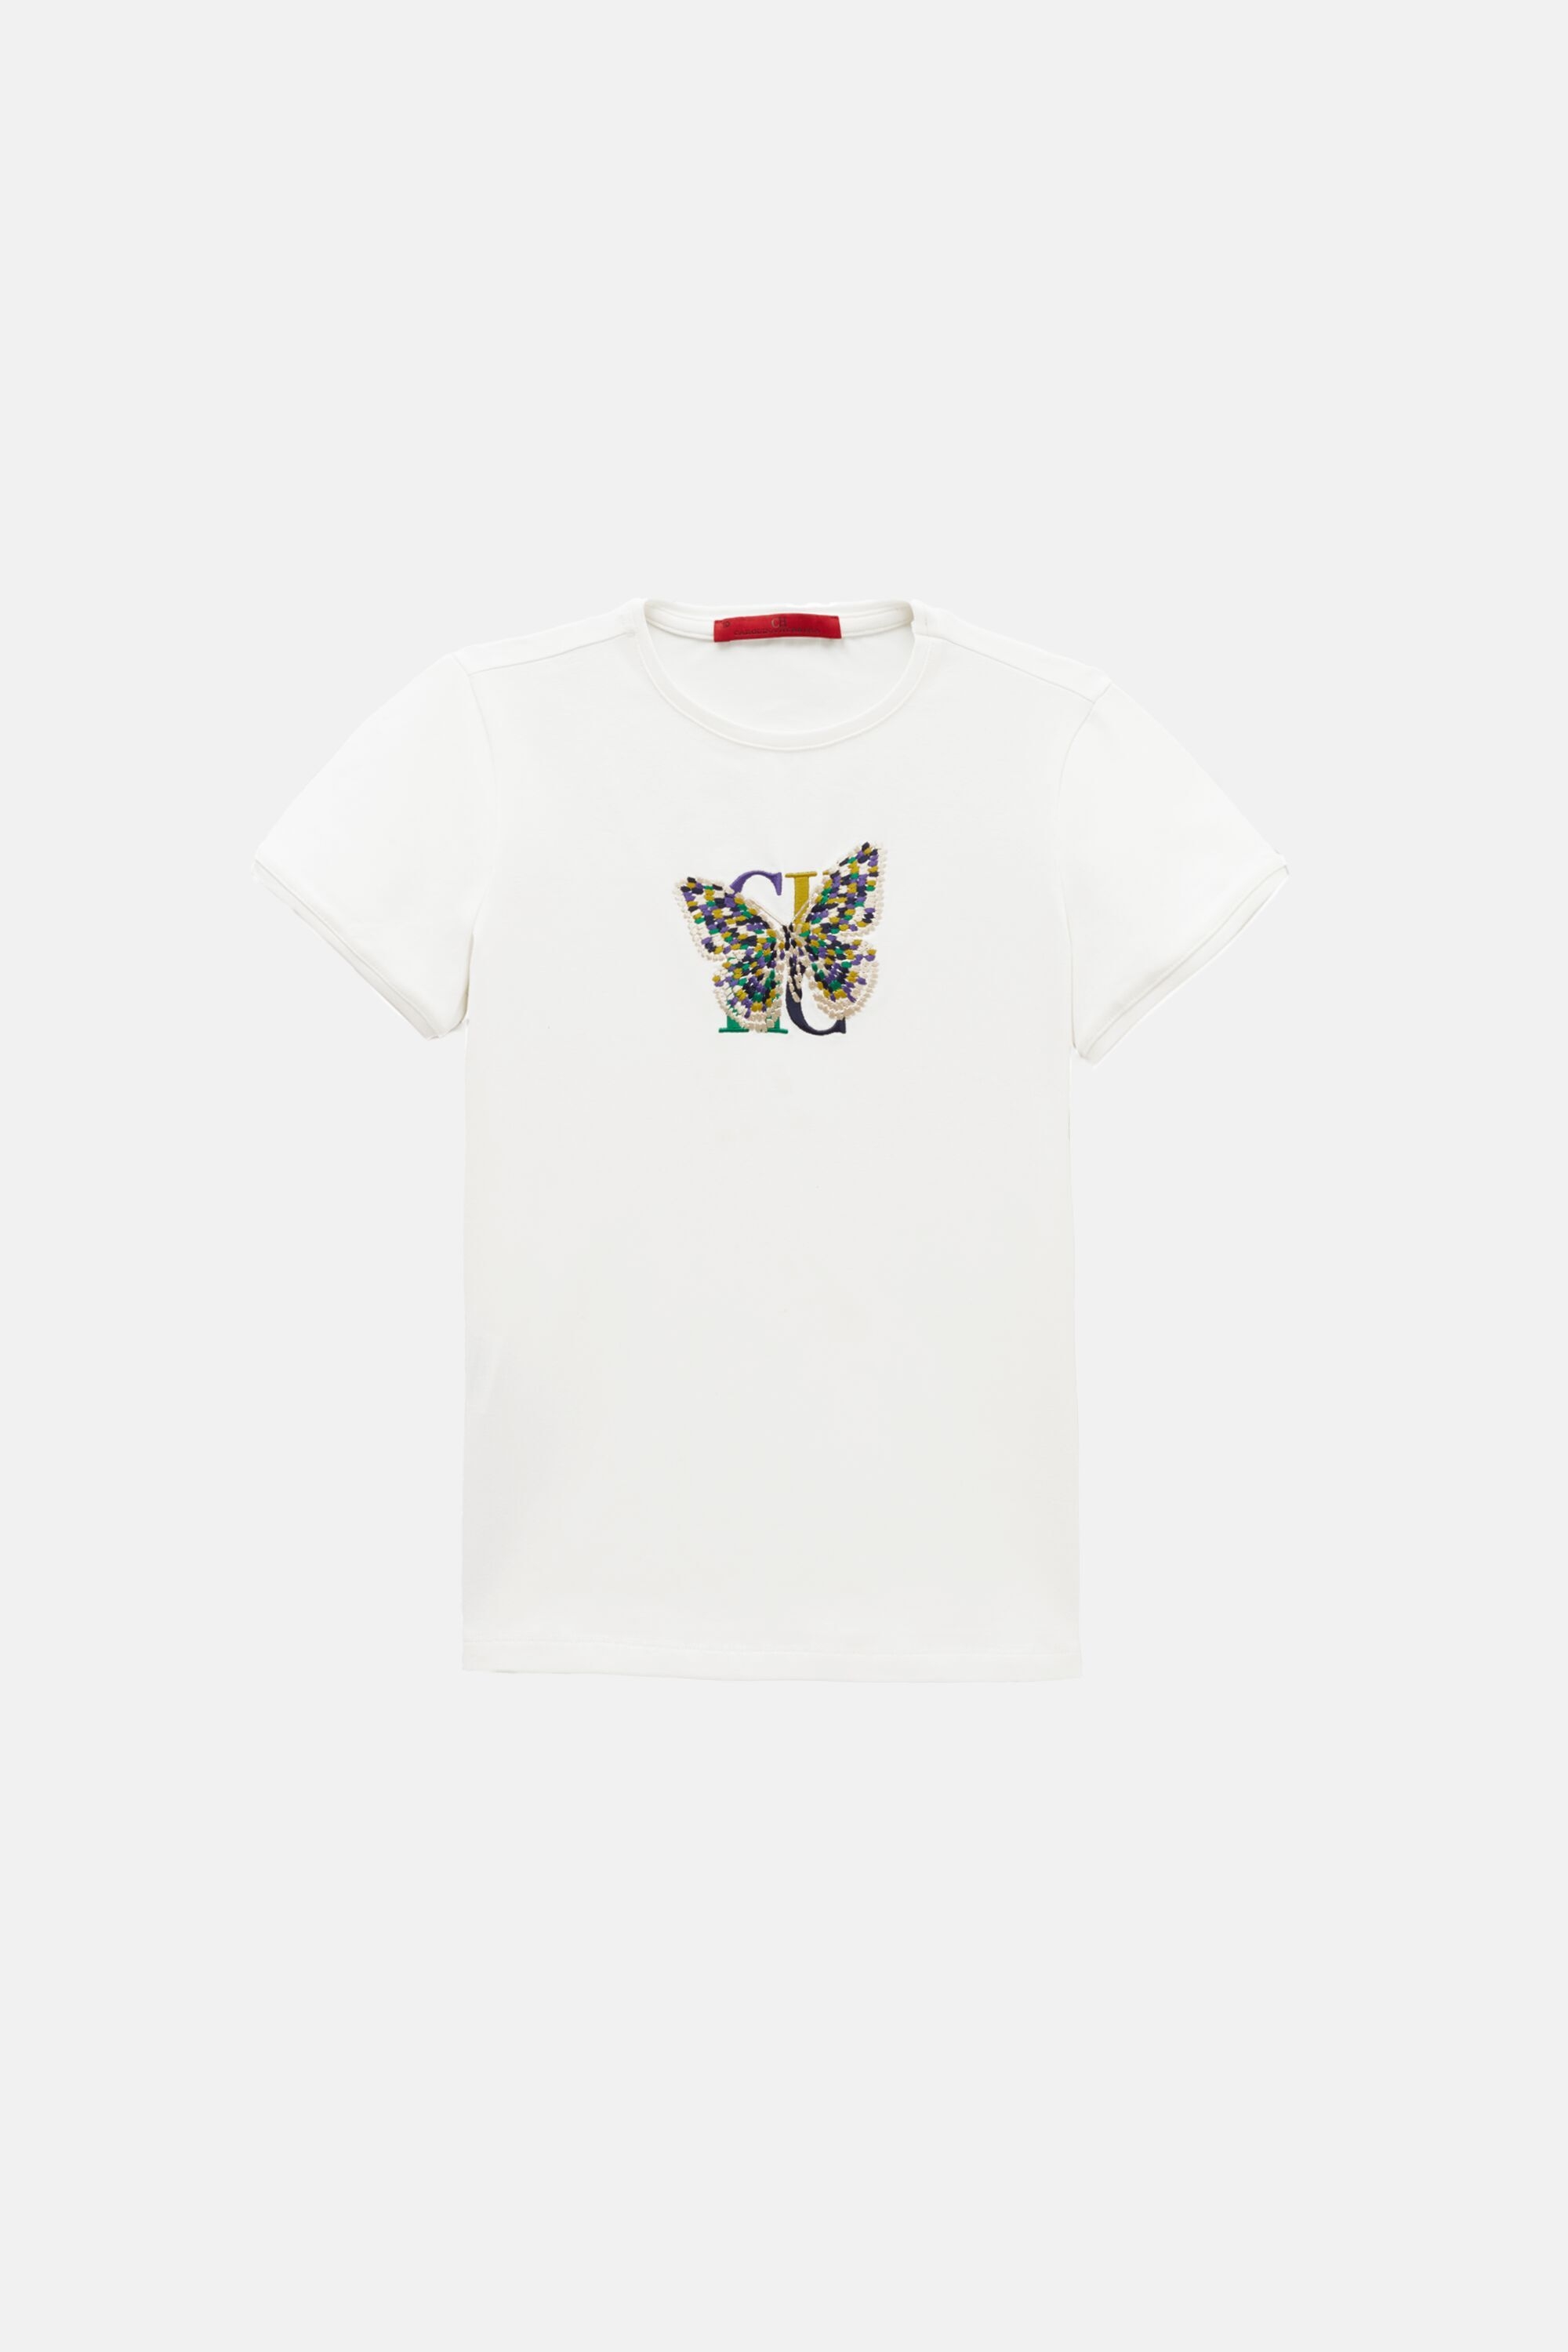 Camiseta CH con mariposa